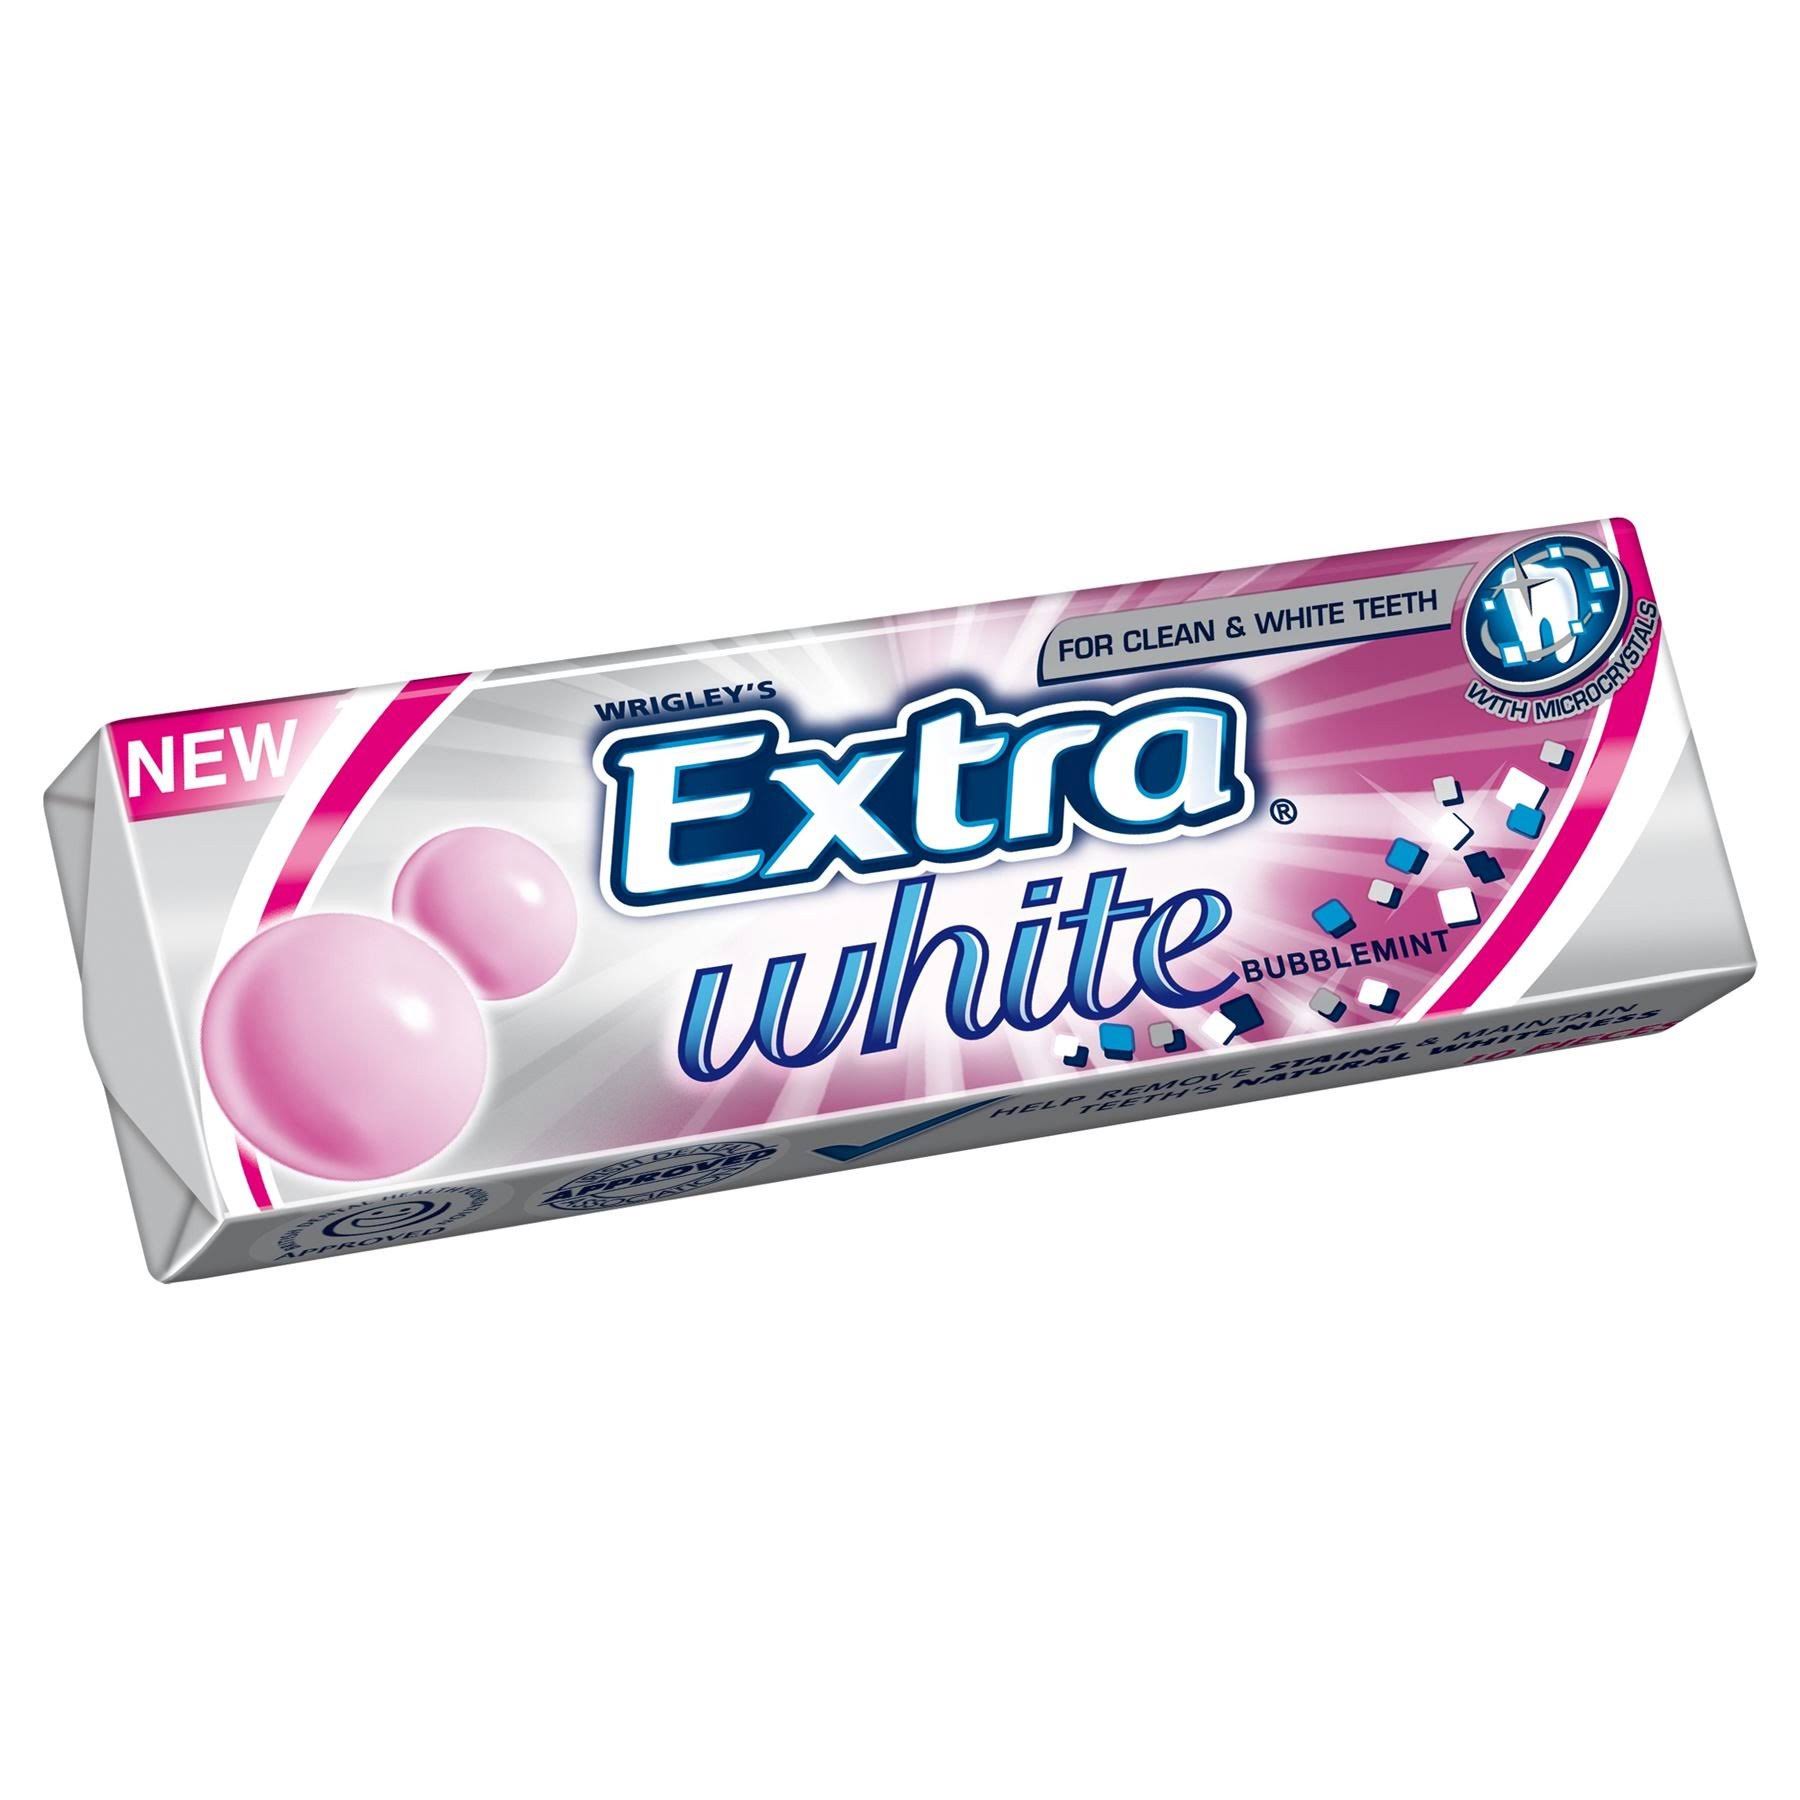 Wrigleys Extra White Gum - Bubblemint